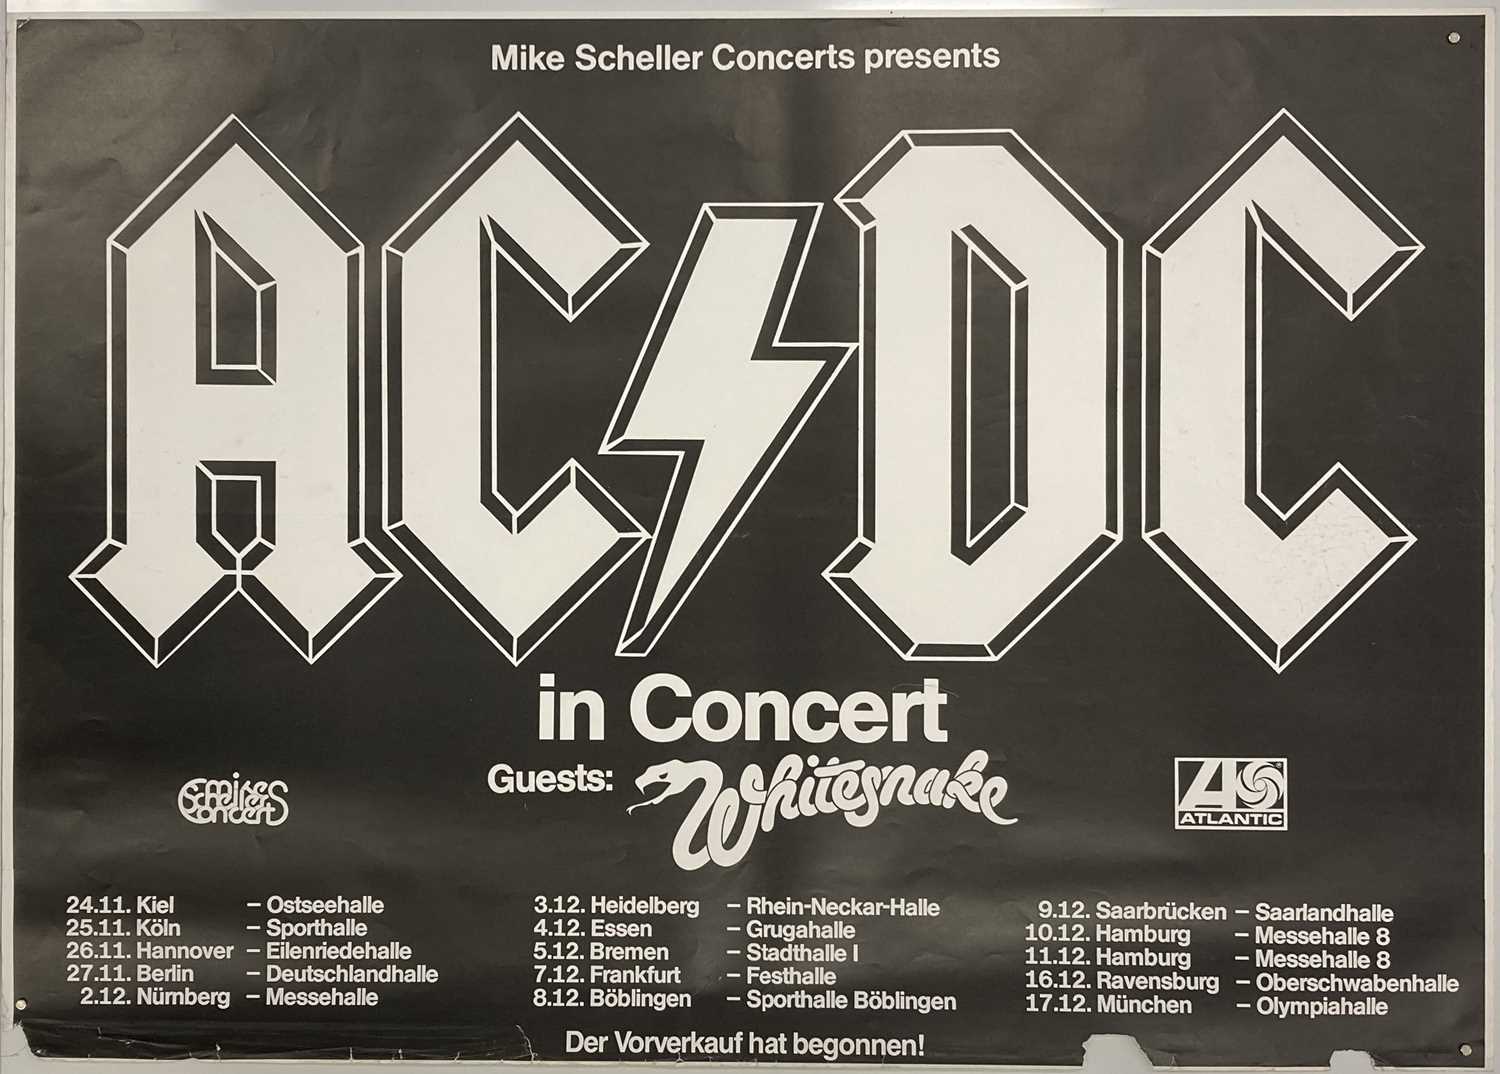 ac dc concert tour dates